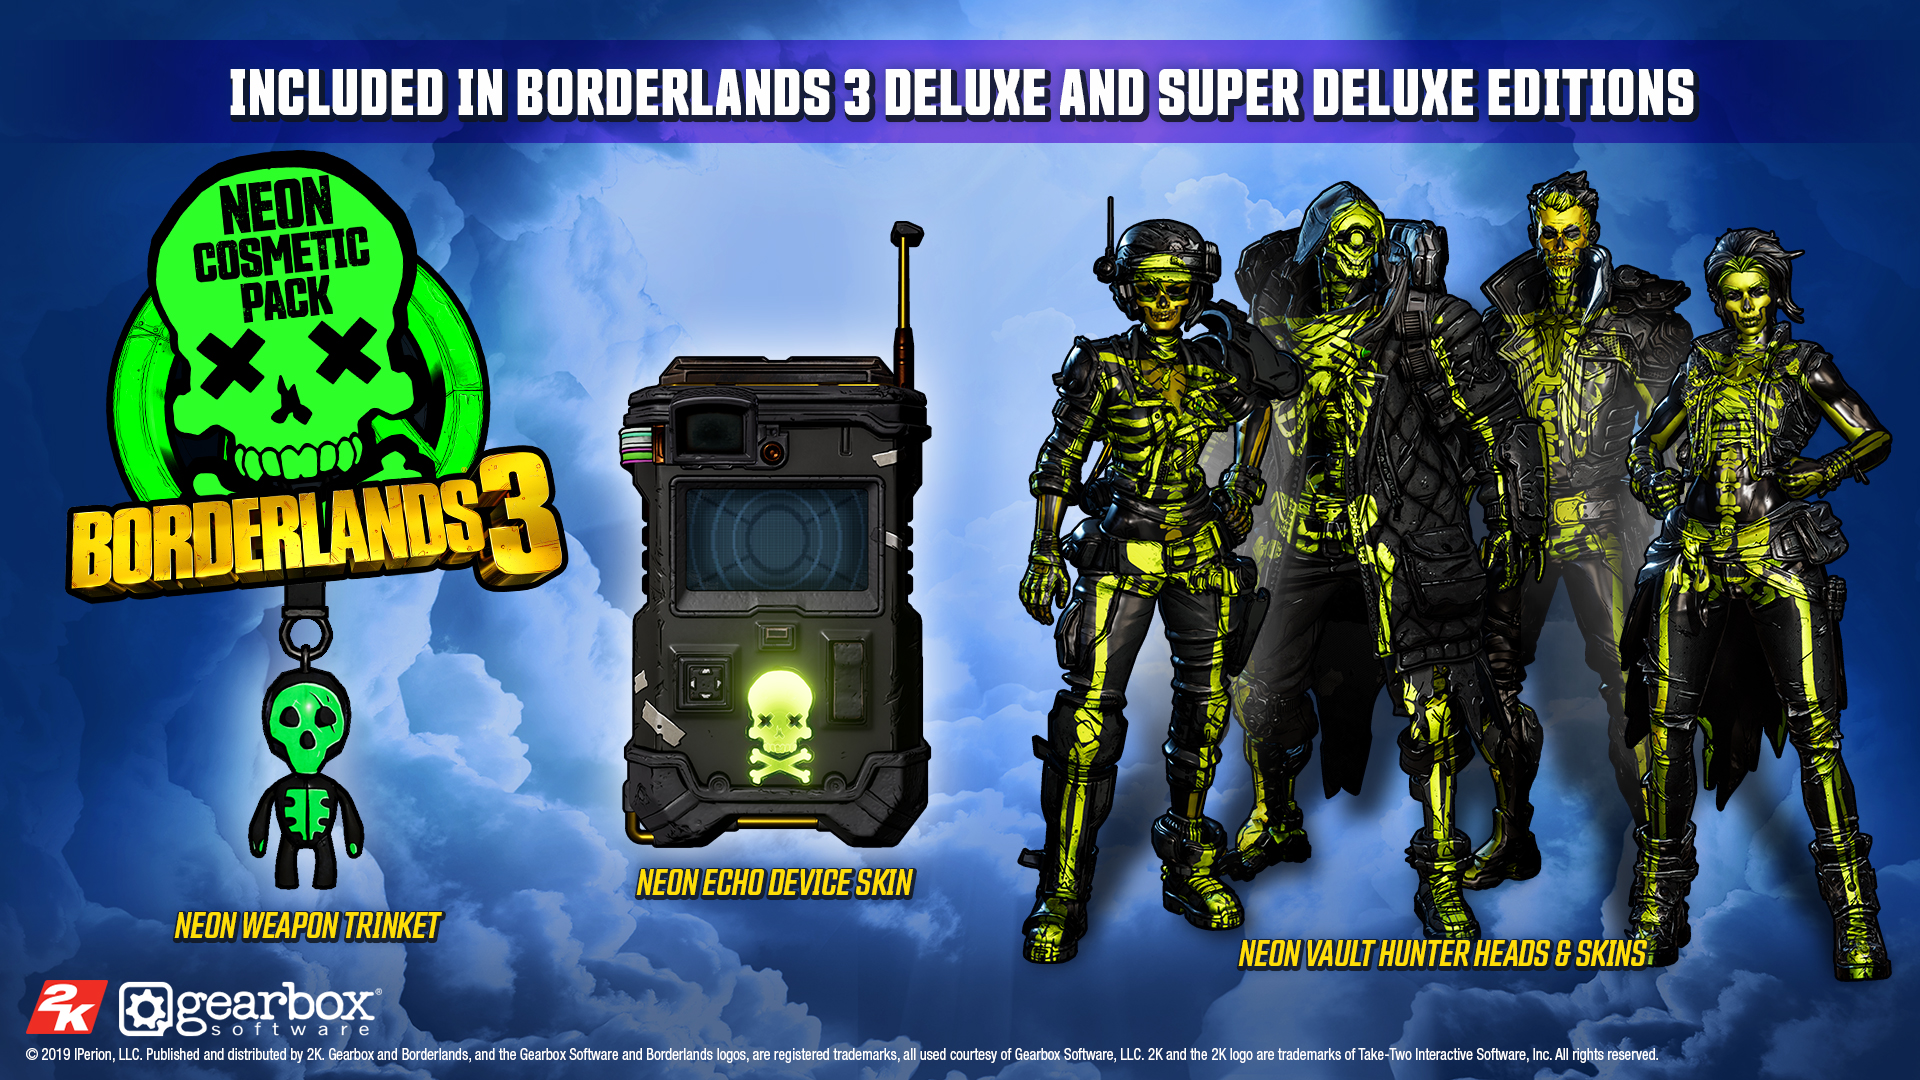 Borderlands 3 super deluxe edition. Косметический набор неон Borderlands 3. Бордерлендс 3 Deluxe Edition. Косметический набор ретро Borderlands 3. Жопец Borderlands 3.